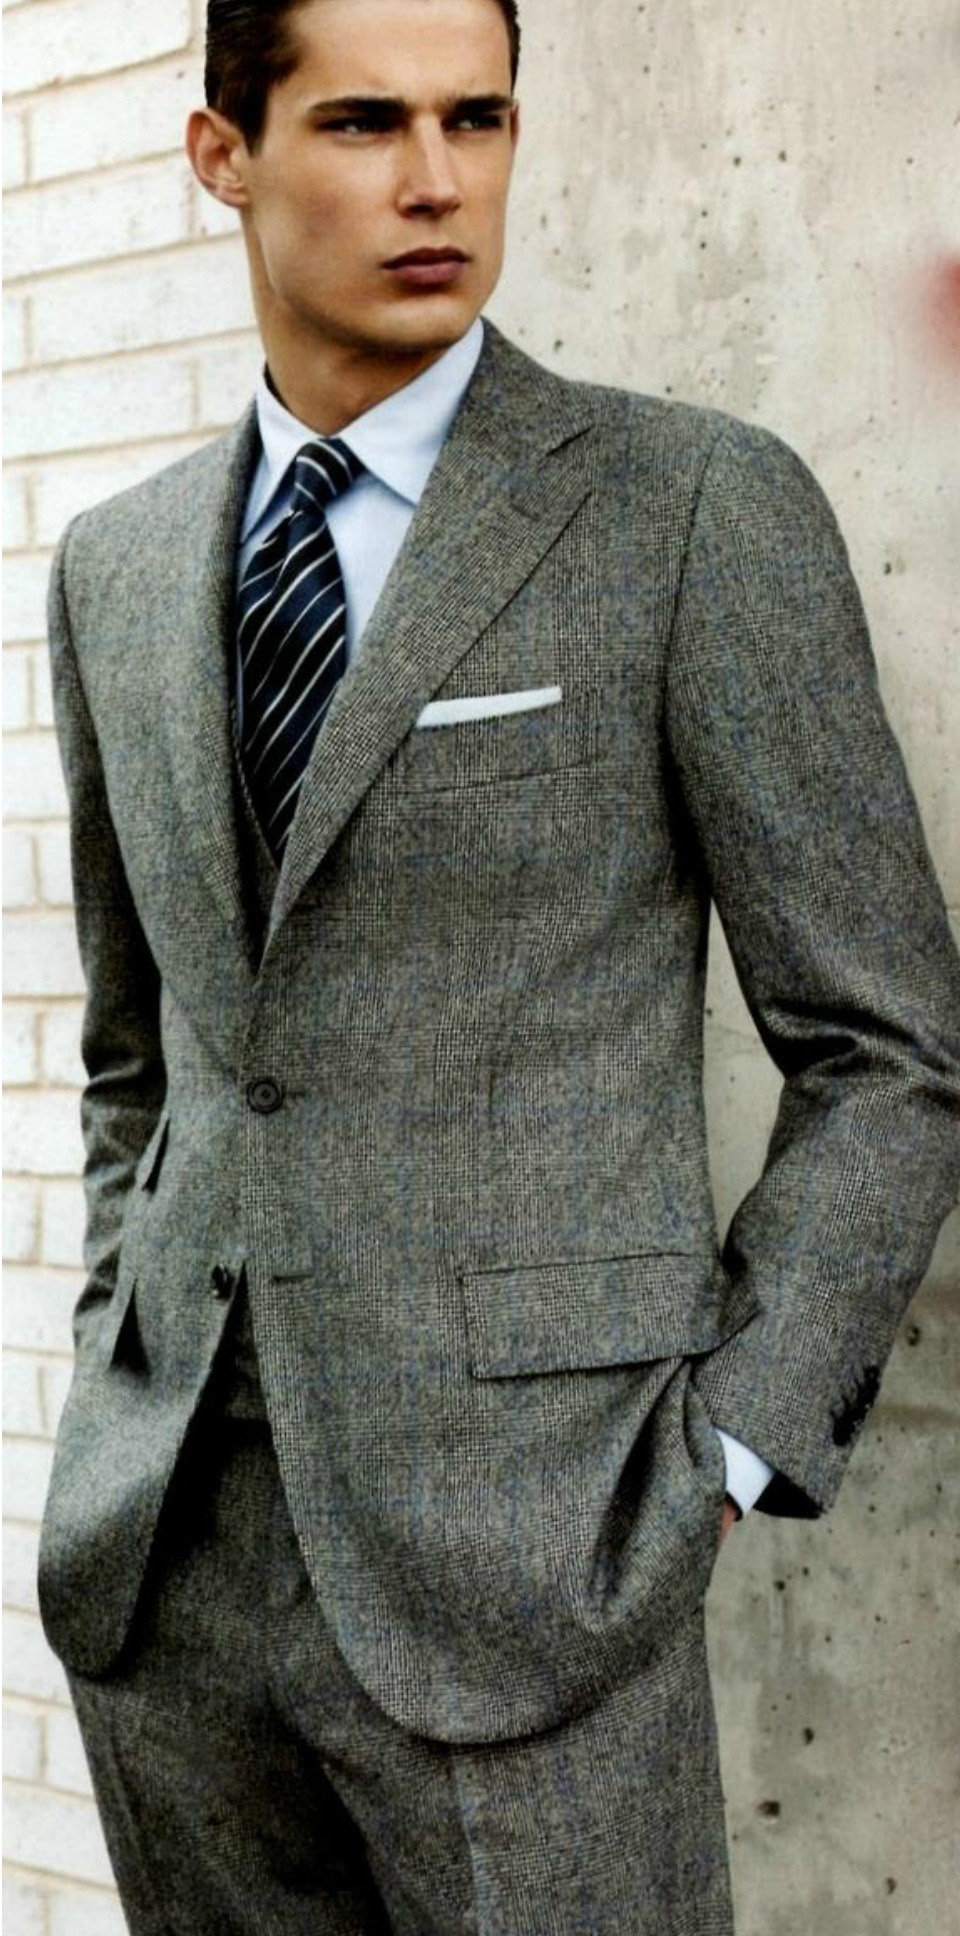 lencos-de-bolso-e-o-paleto-gravata-costume-terno-combinacao-estilo-moda-street-style-alexandre-taleb (22)